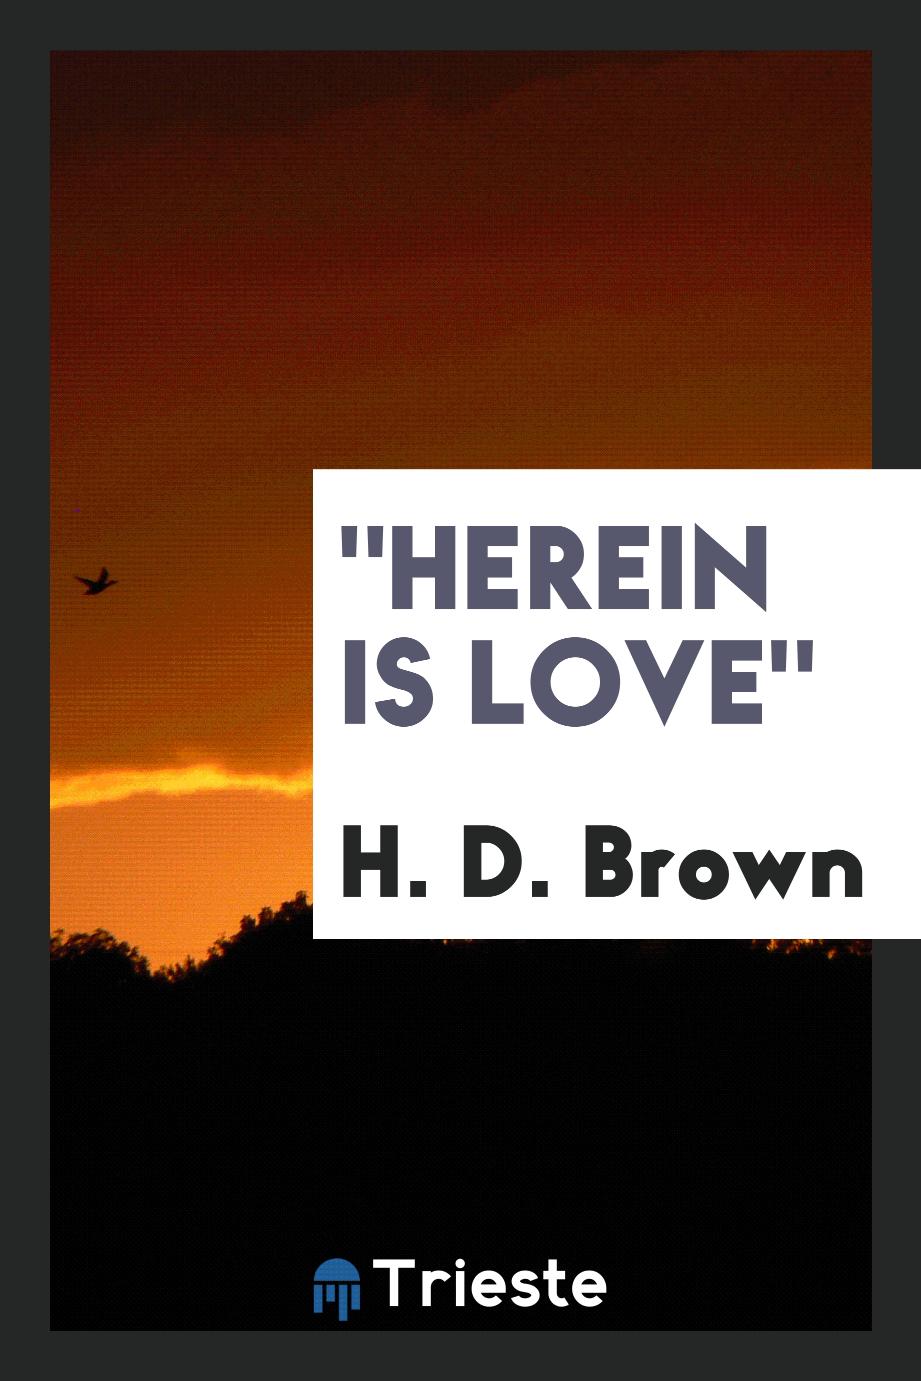 "Herein is love"